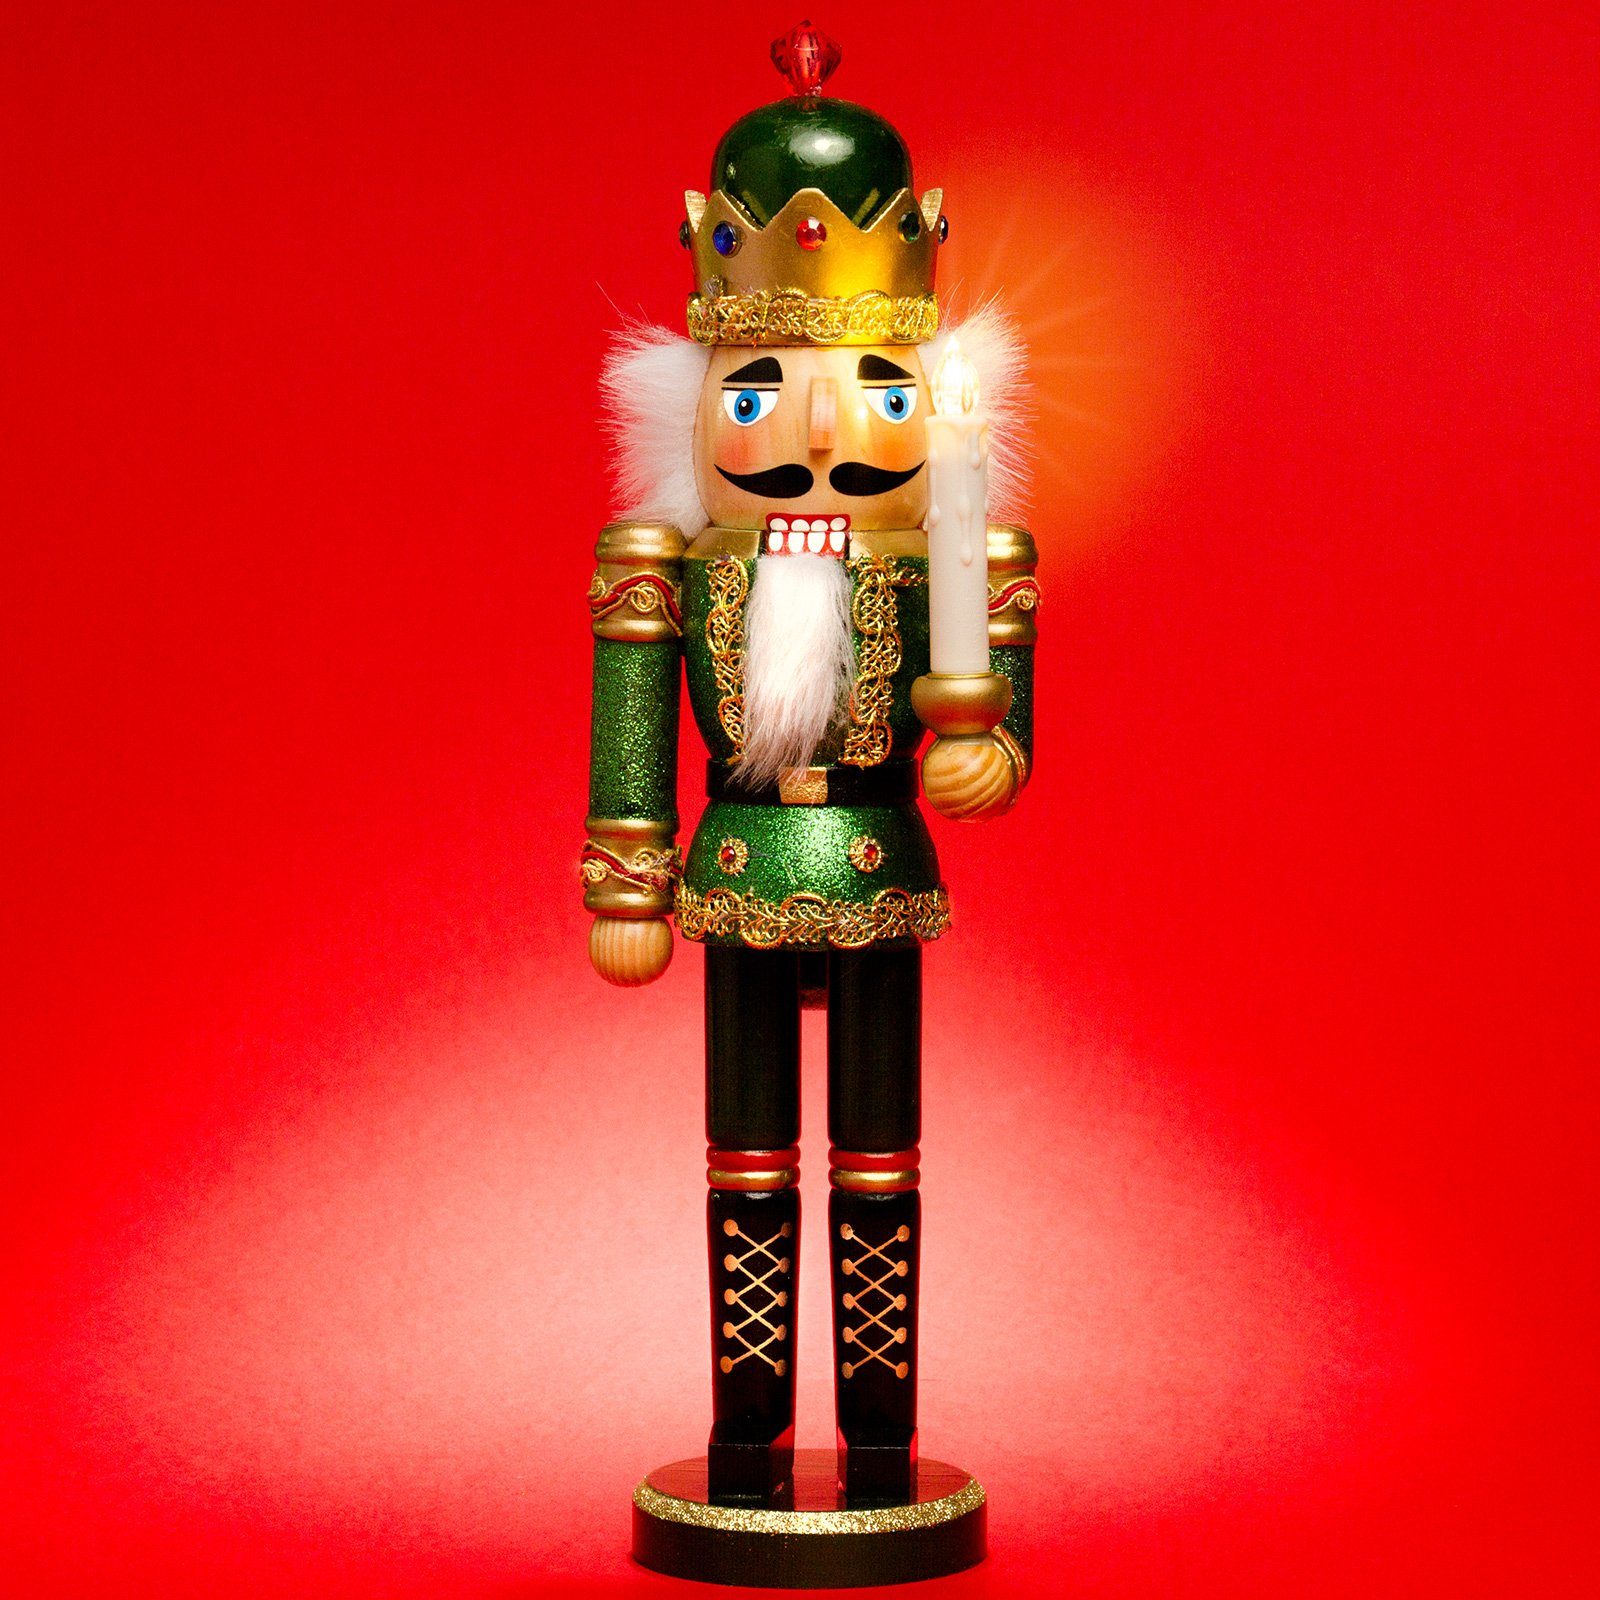 SIKORA Weihnachtsfigur NK-C XL C03 grün Glitzer Deko aus - Kerze Nussknacker Holz mit KÖNIG LED